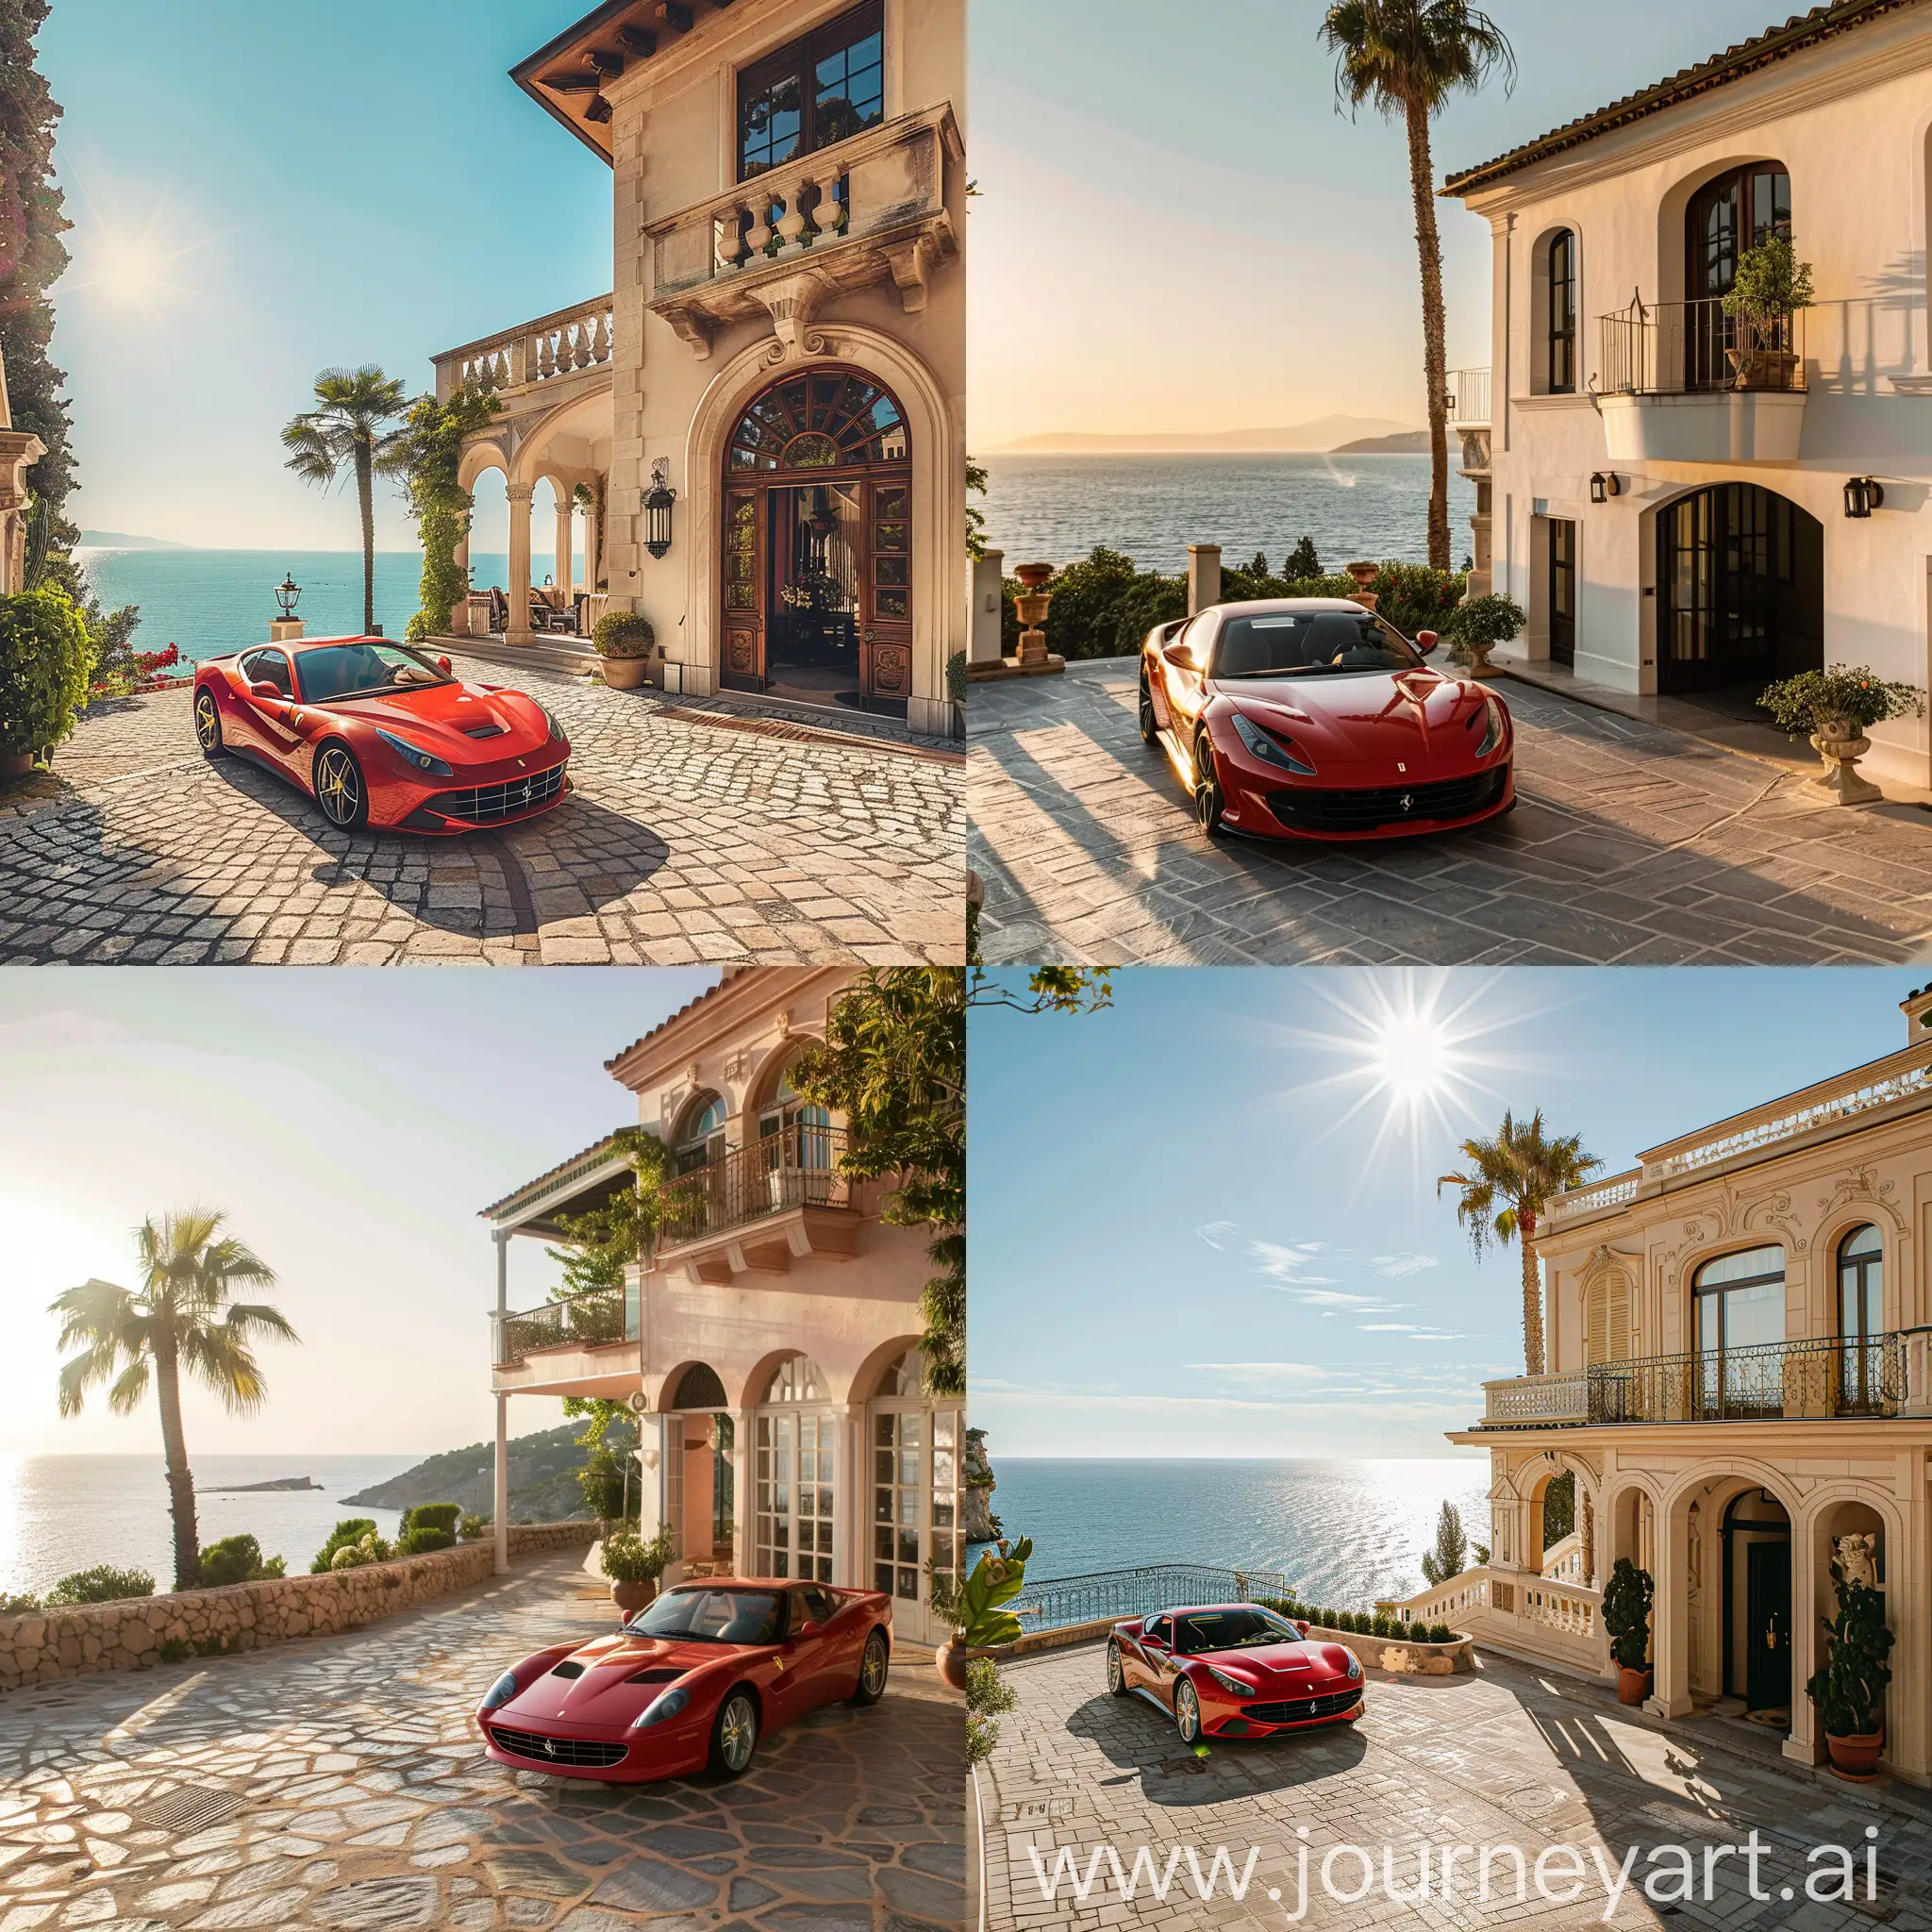 Mediterranean-Villa-by-the-Sea-with-a-Parked-Ferrari